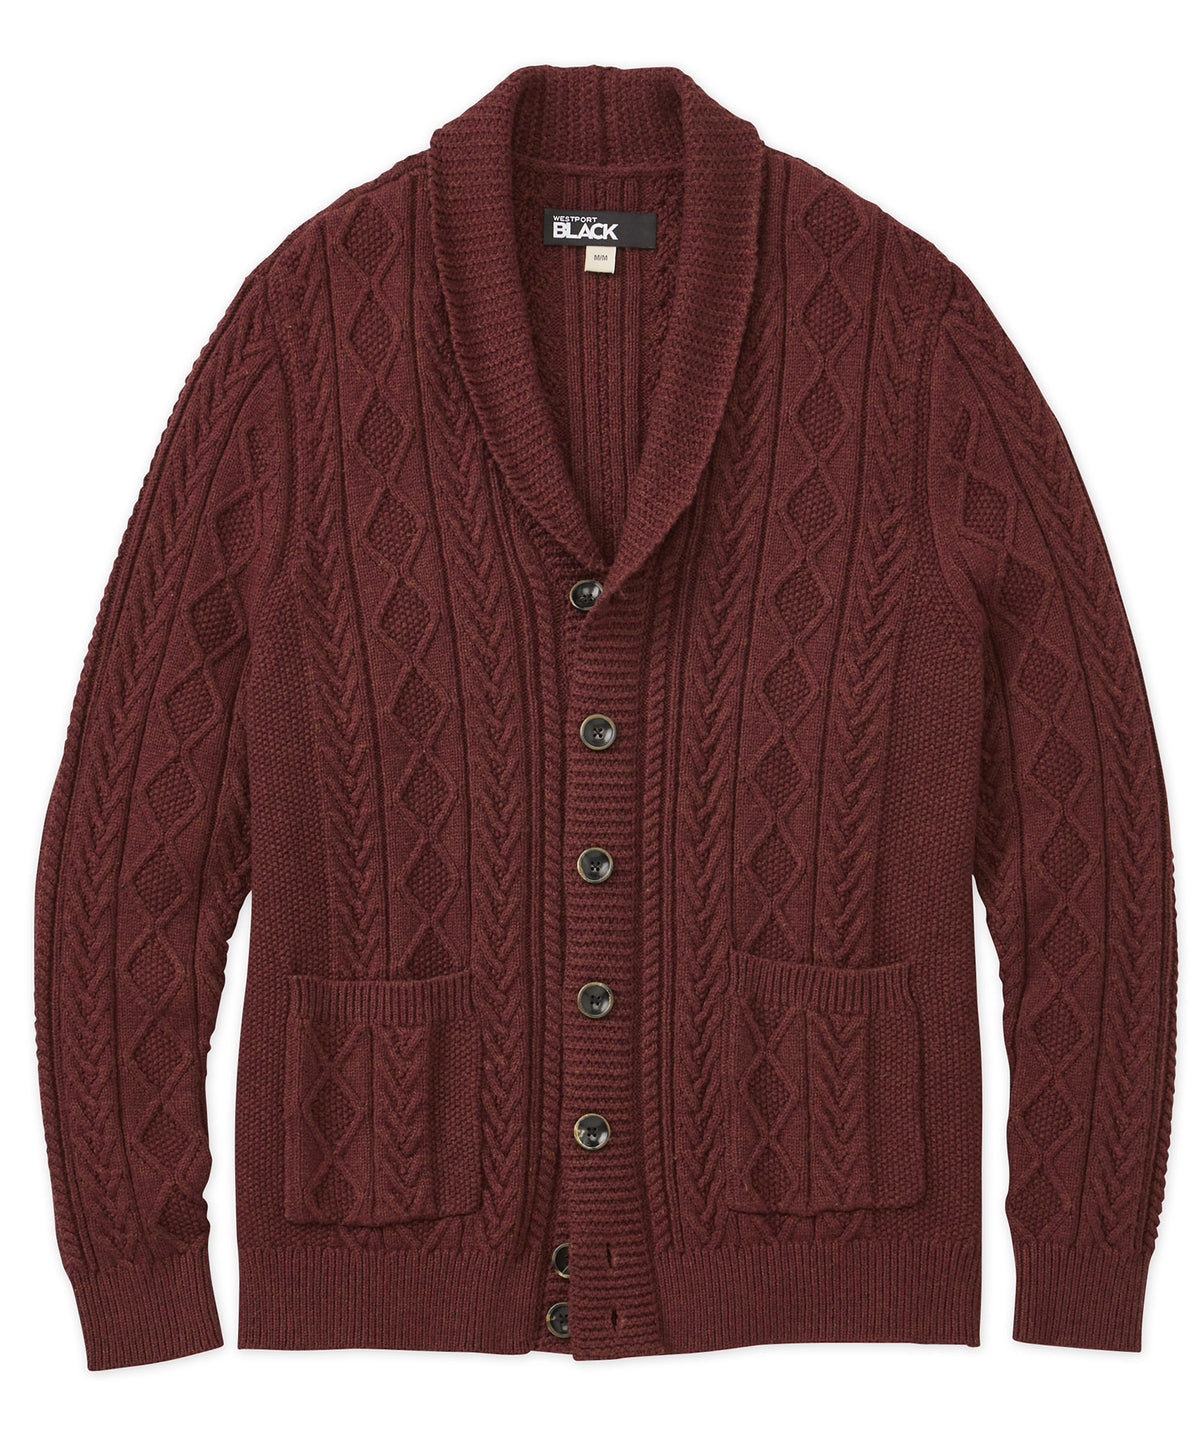 Westport Black Shawl Collar Cable Cardigan Sweater